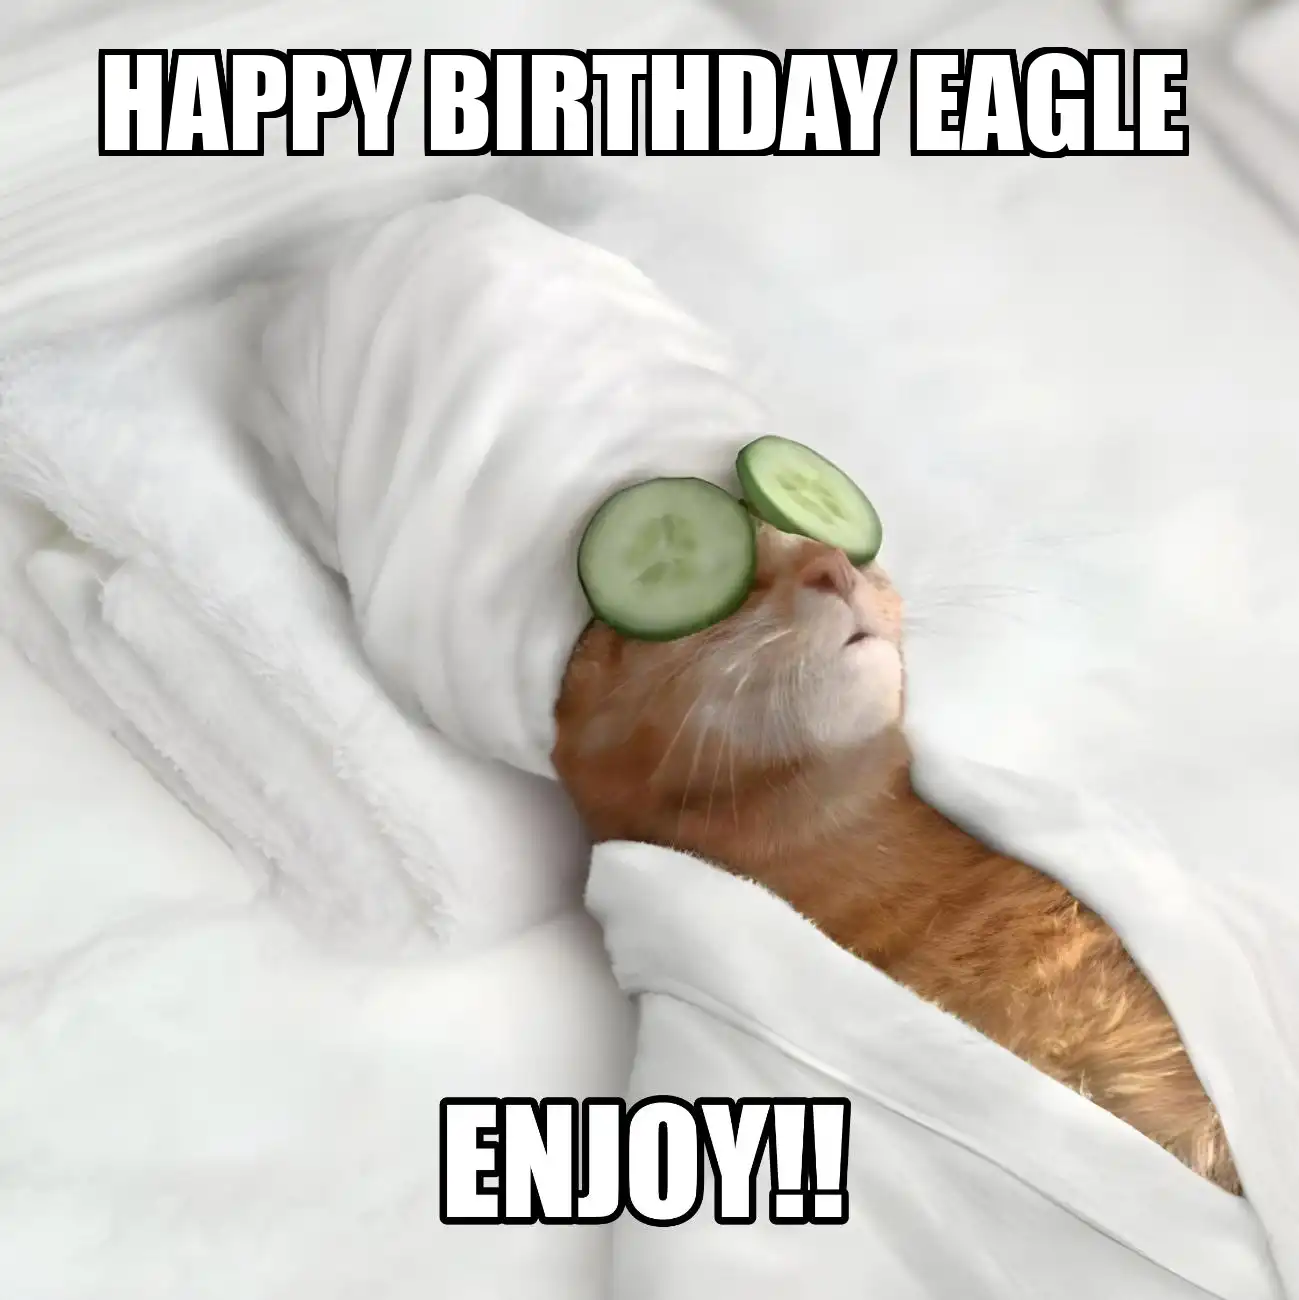 Happy Birthday Eagle Enjoy Cat Meme